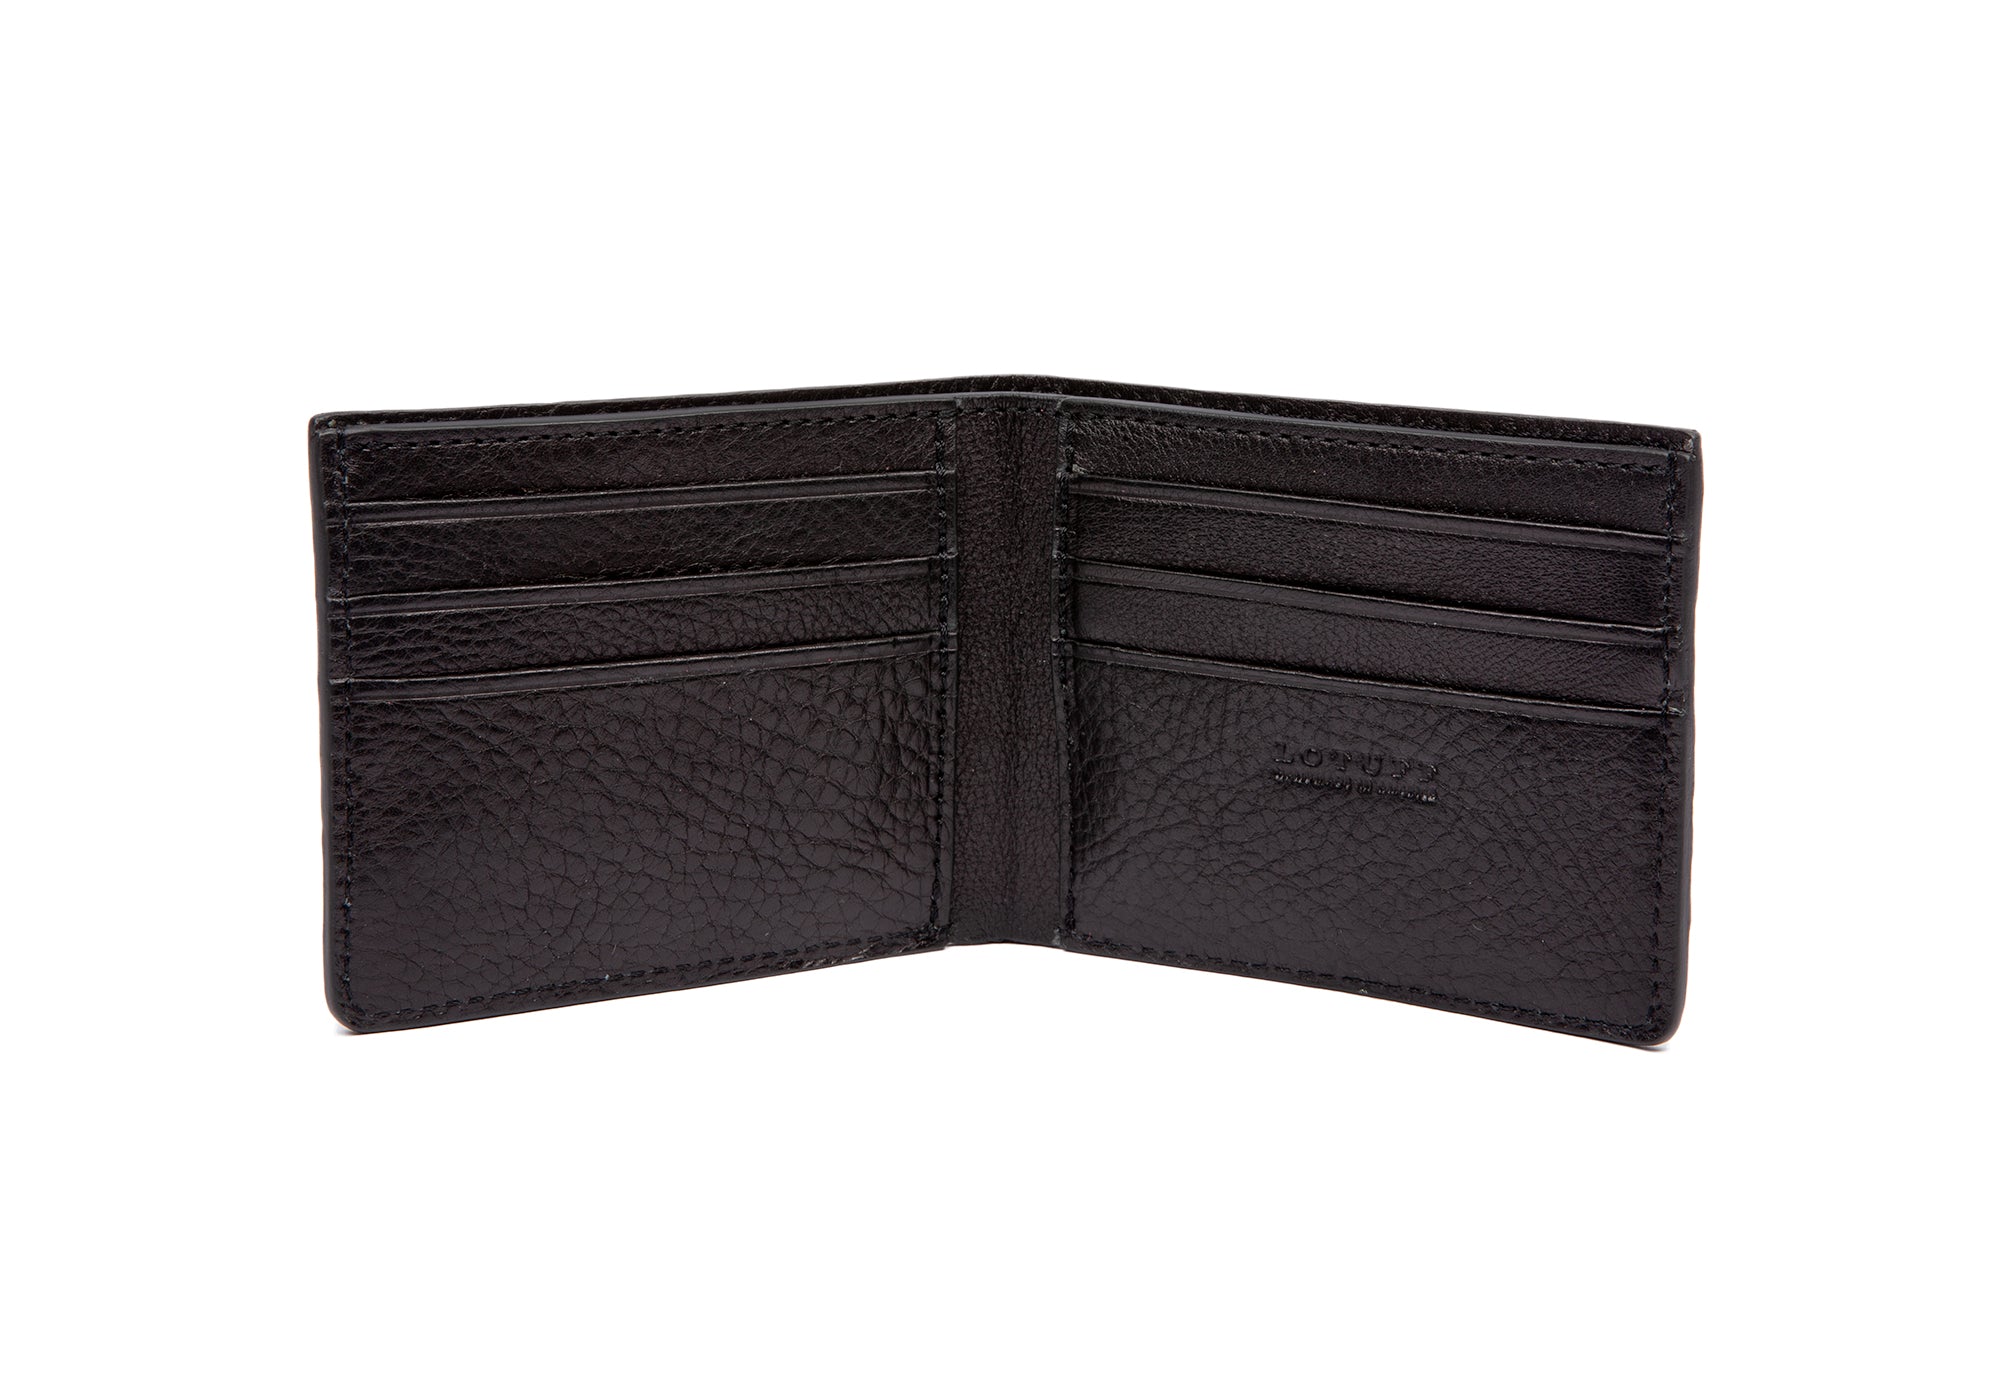 American Alligator Wallet - Matte Black No Personalization / 5 Card Slot + ID Slot / Add Partition